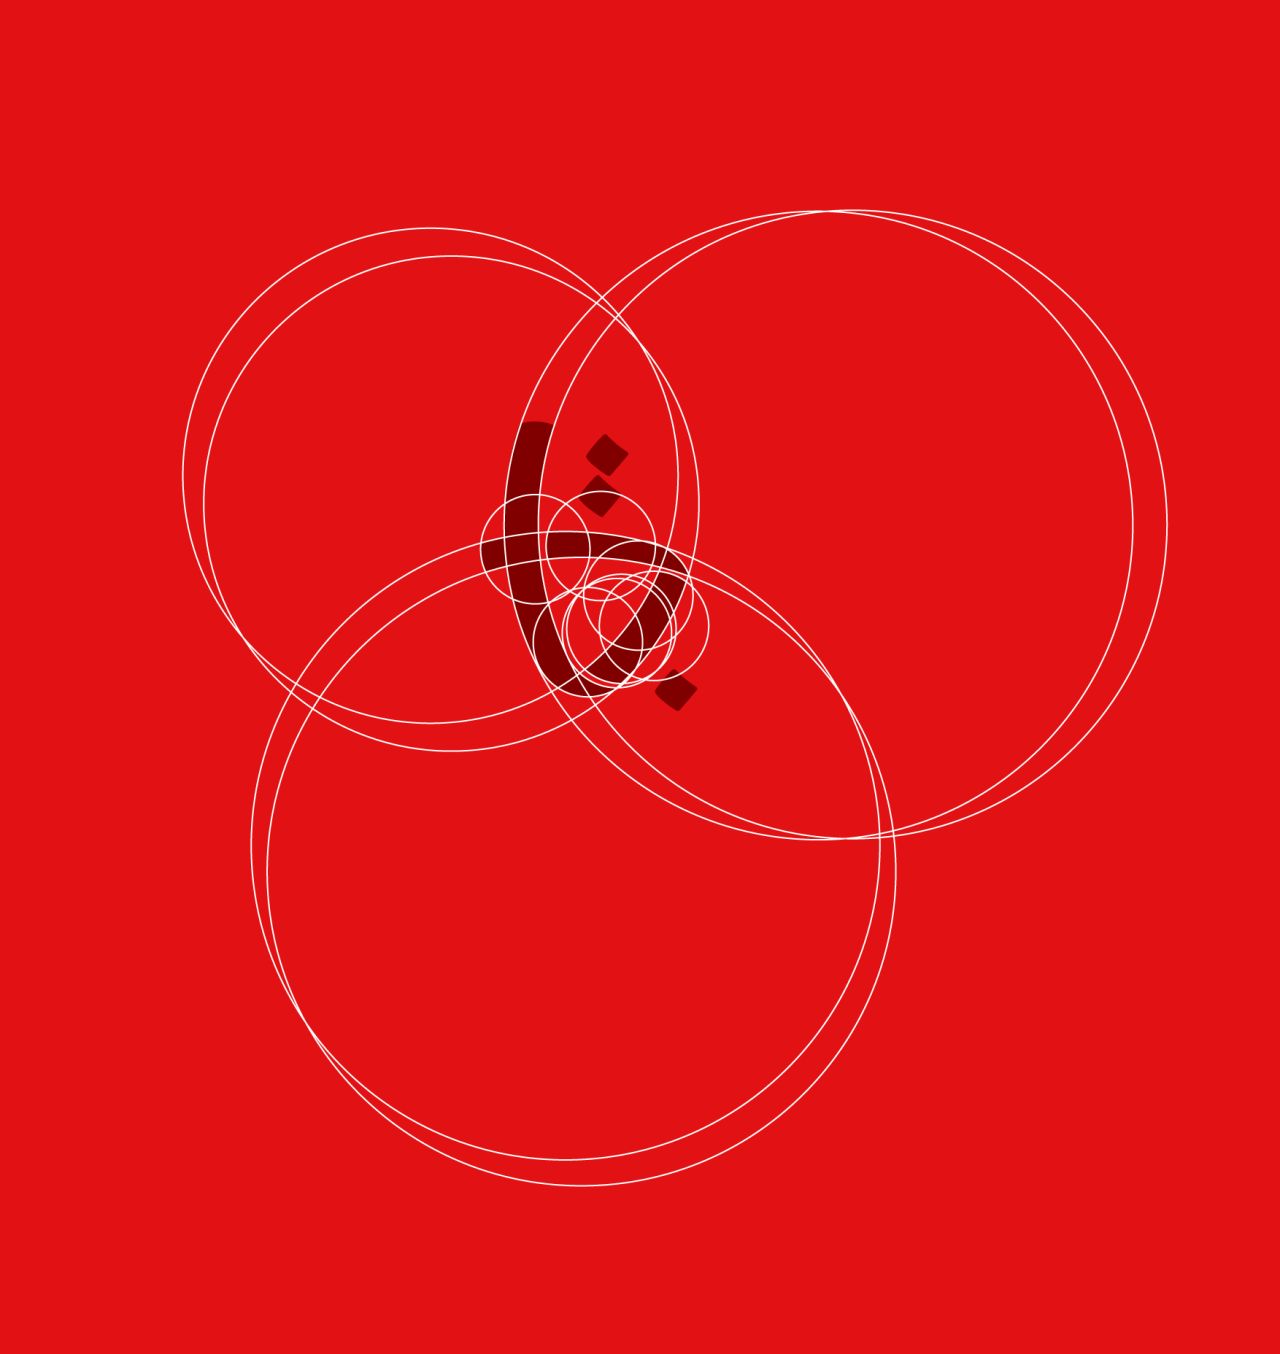 Toulin Balabaki logo in circle anatomy.